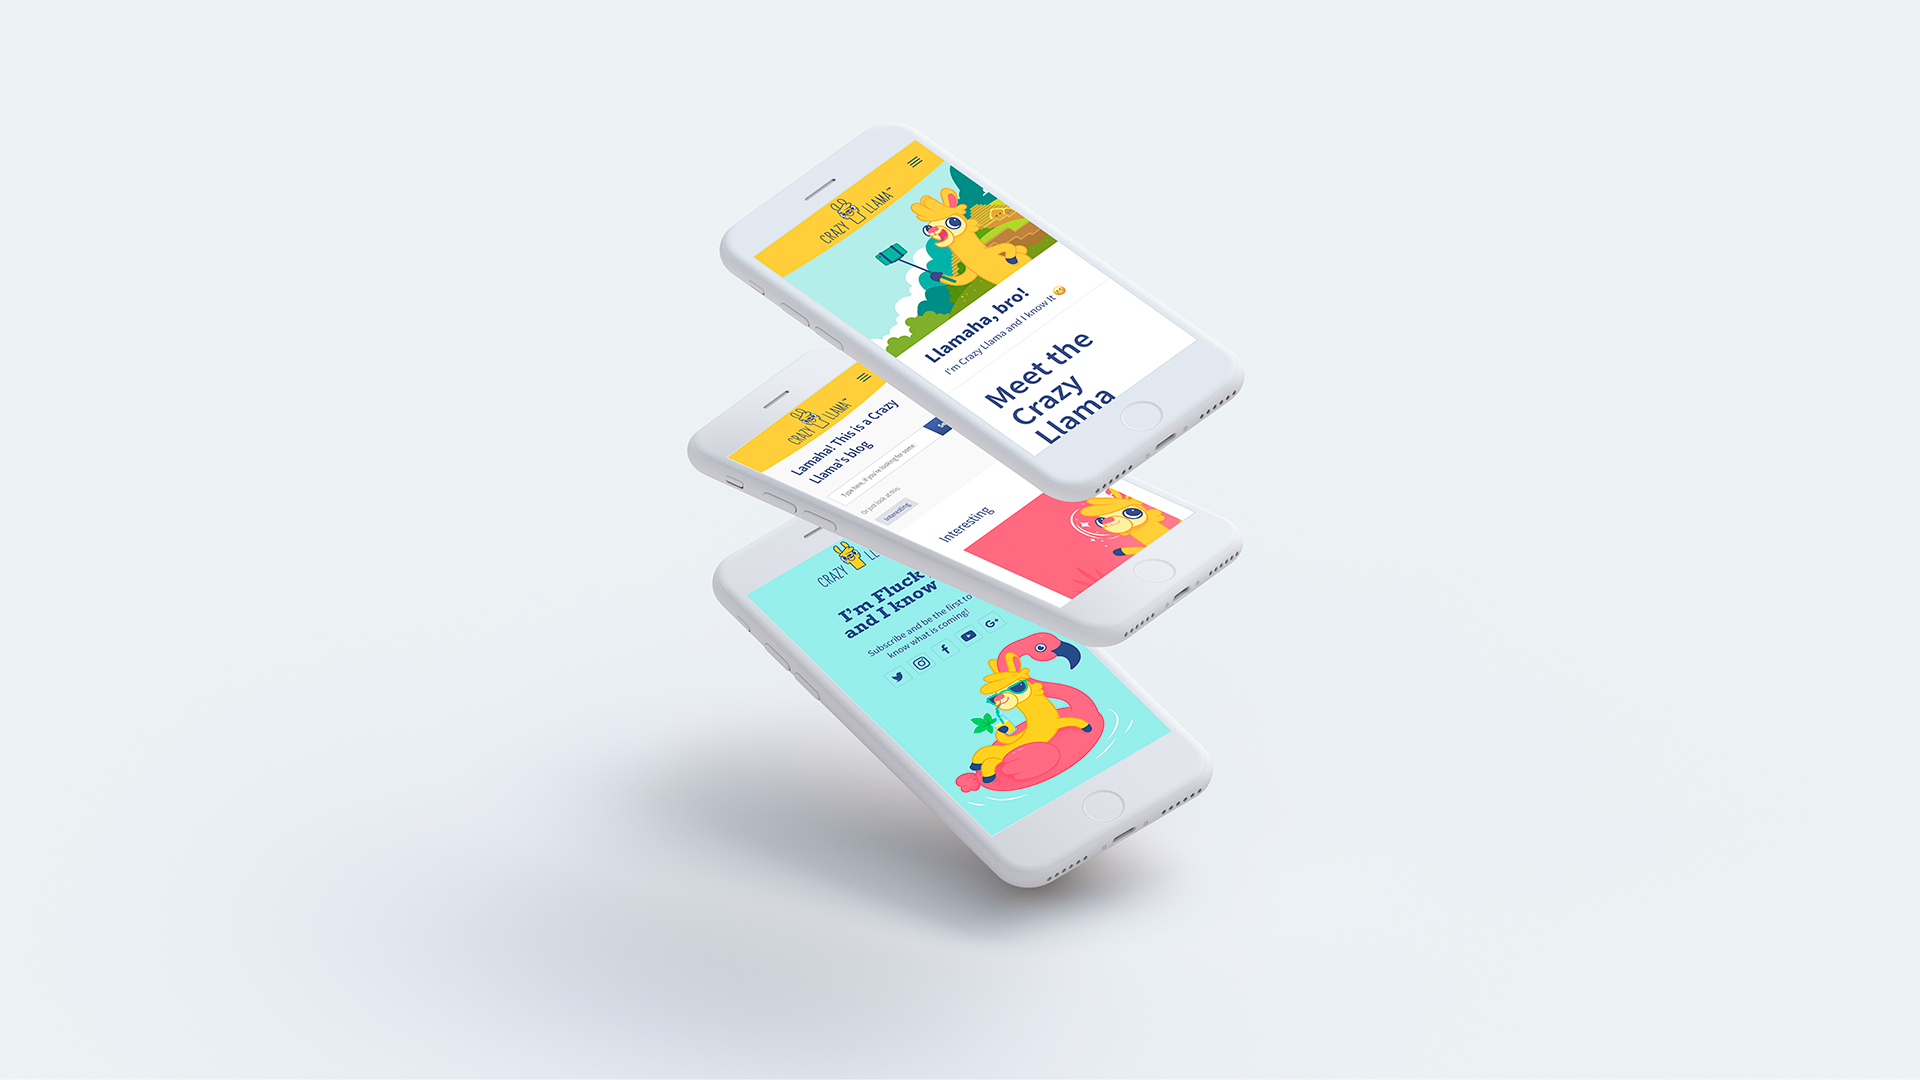 Crazy Llama Booking platform Front-end UI/UX Design Project